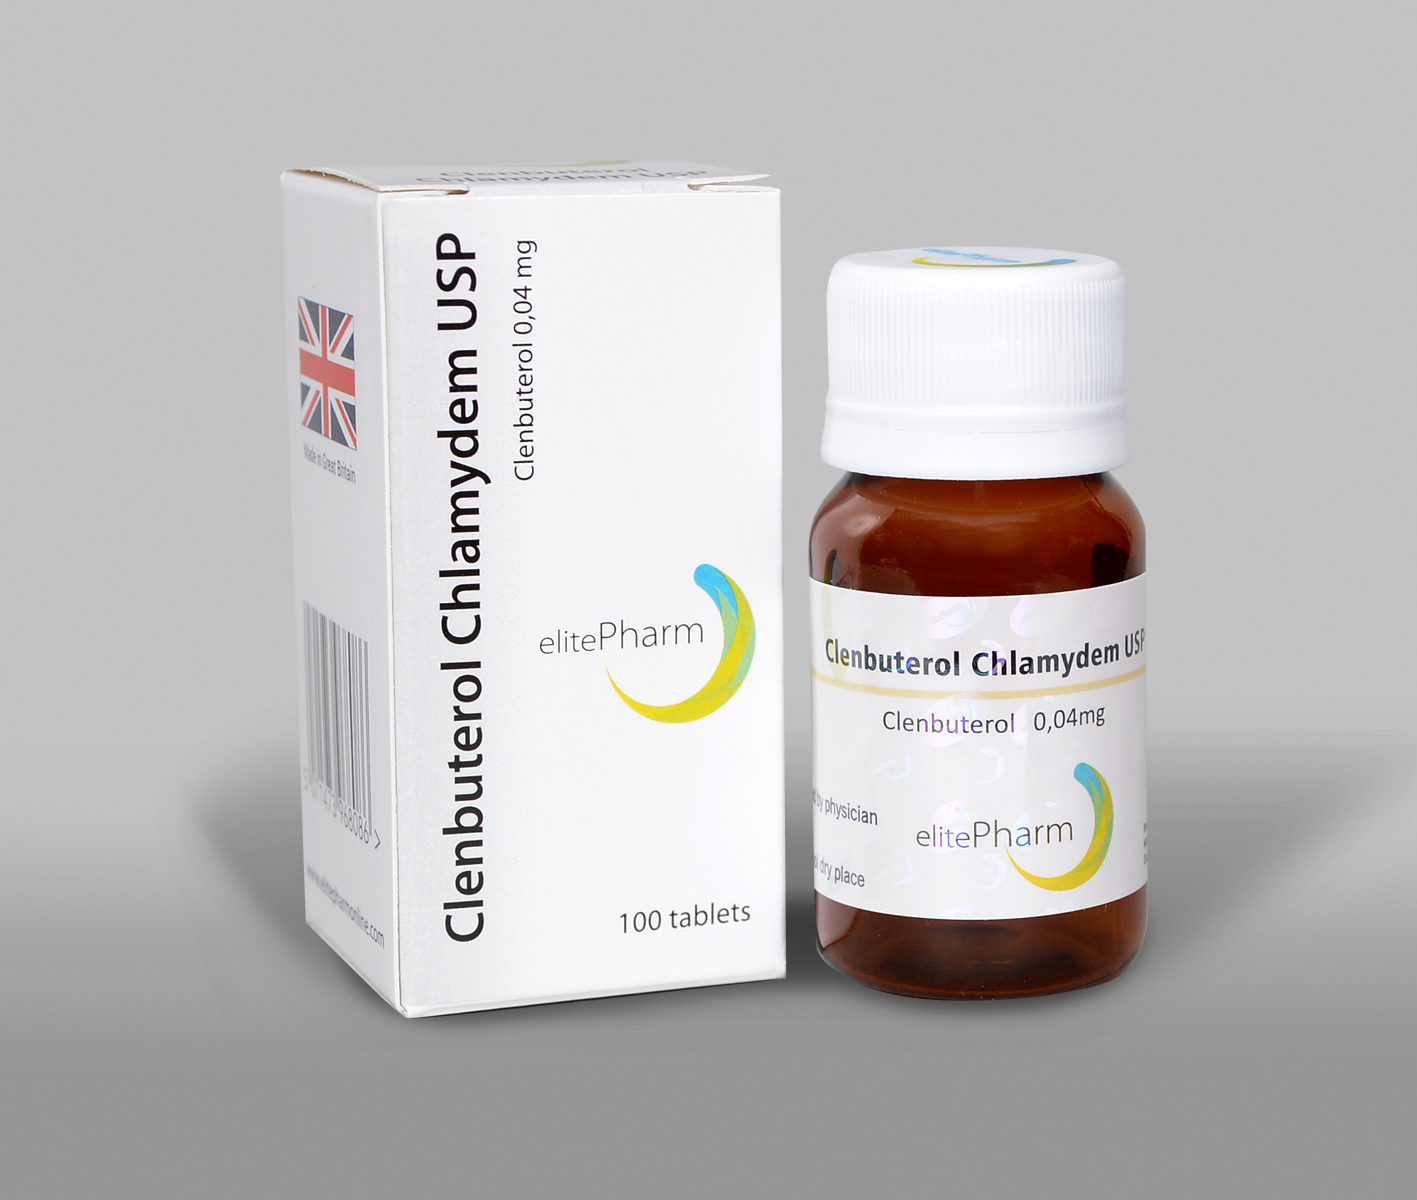 Clenbuterol Clamydem USP